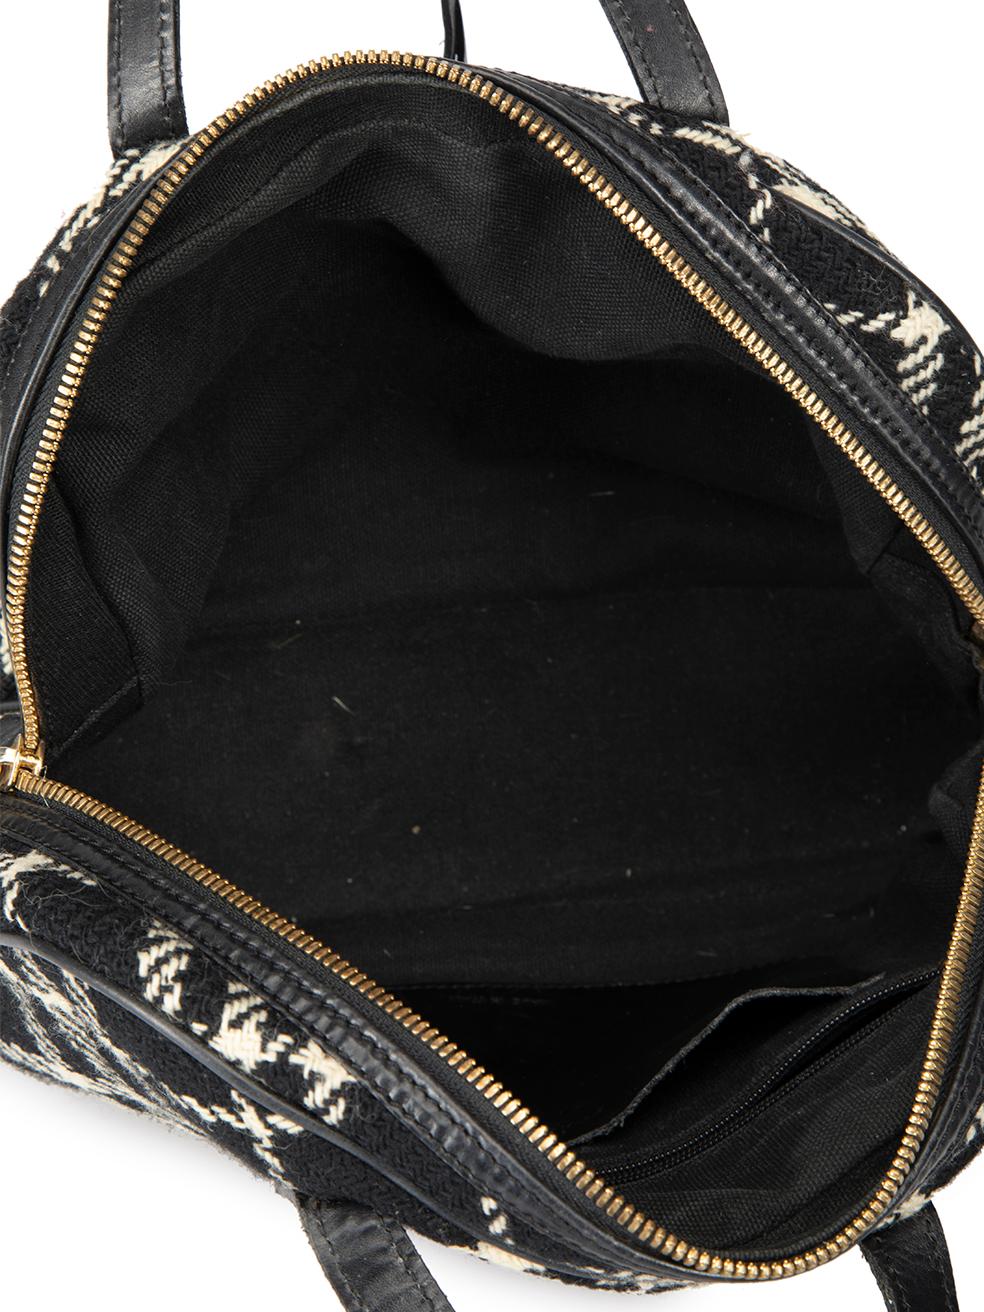 Burberry Women's Black Wool Small Check Bag 2